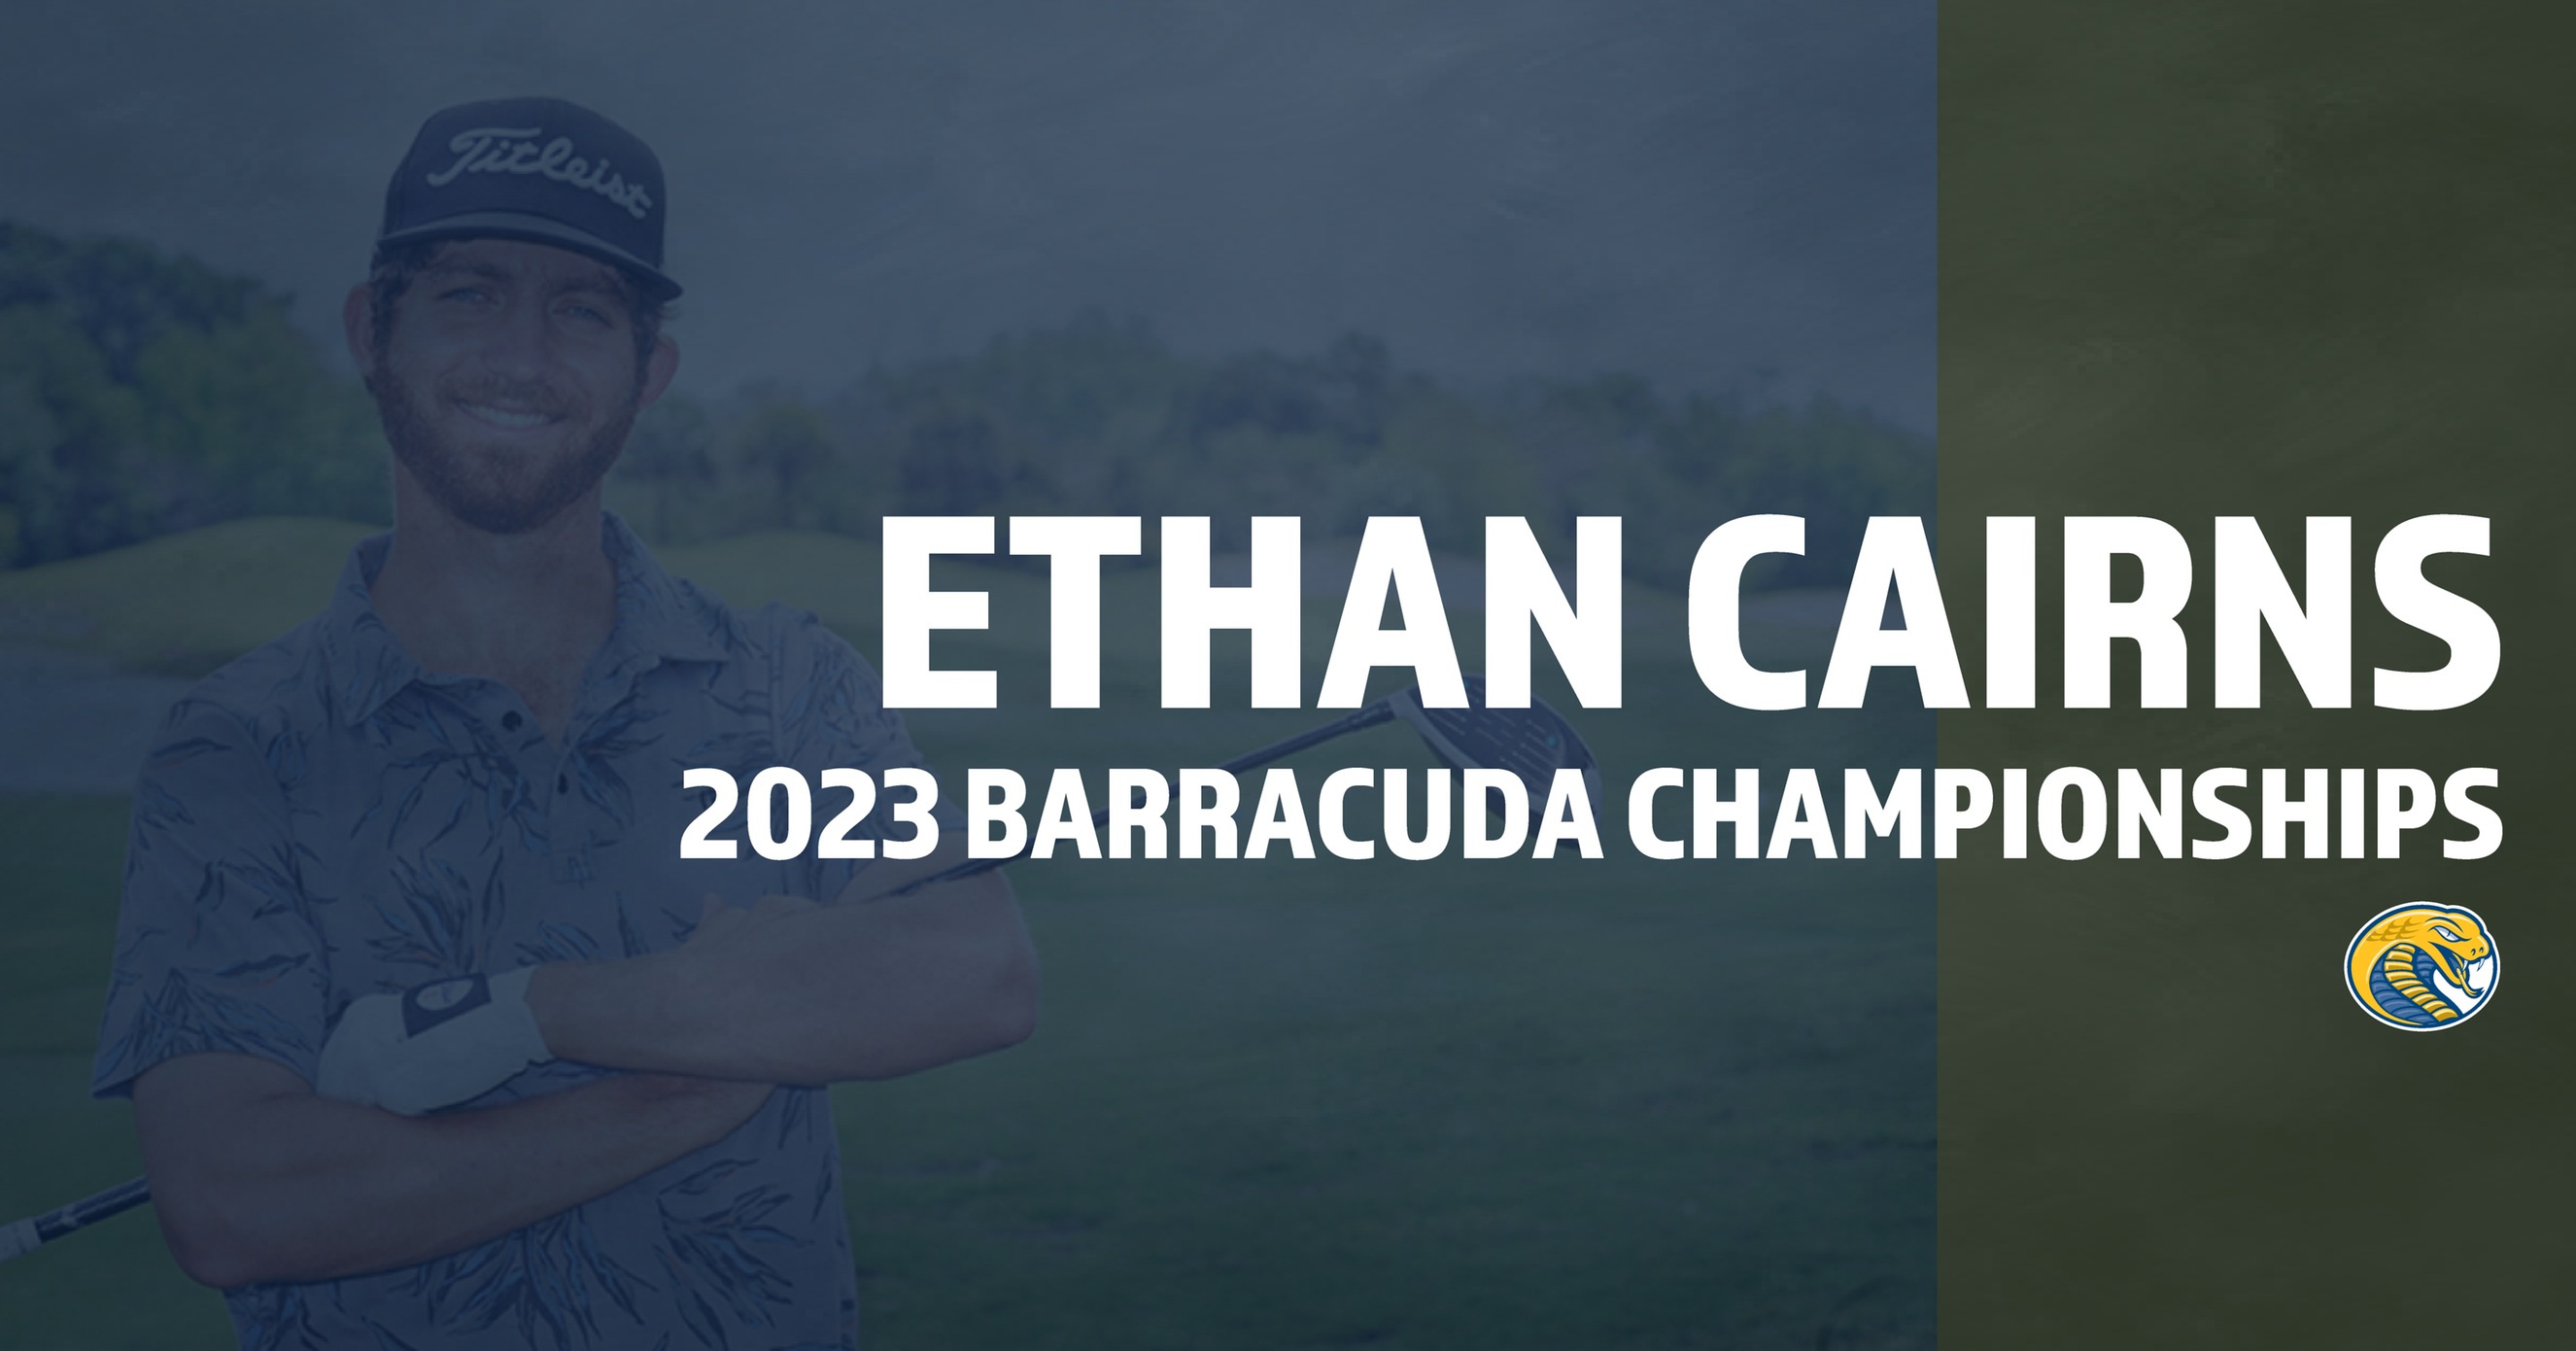 Cairns '19 Makes PGA Tour Debut at Barracuda Championship